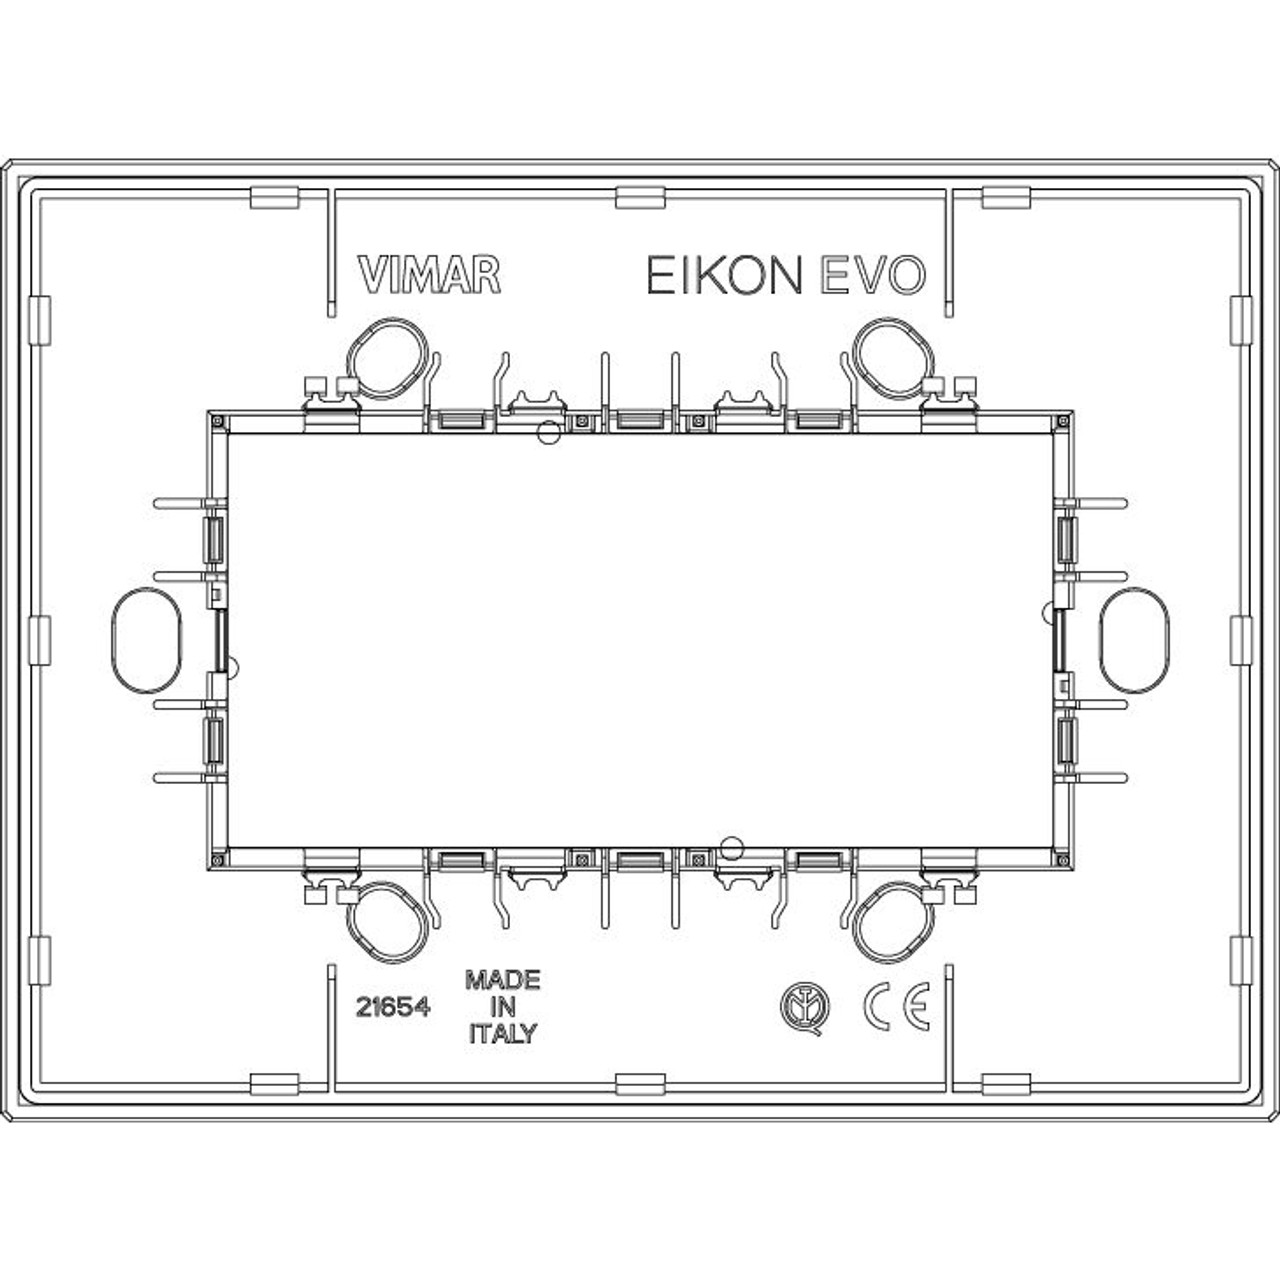 Vimar - Eikon EVO 21654 Cover Plate - 4 Module, Metal - Apollo Lighting